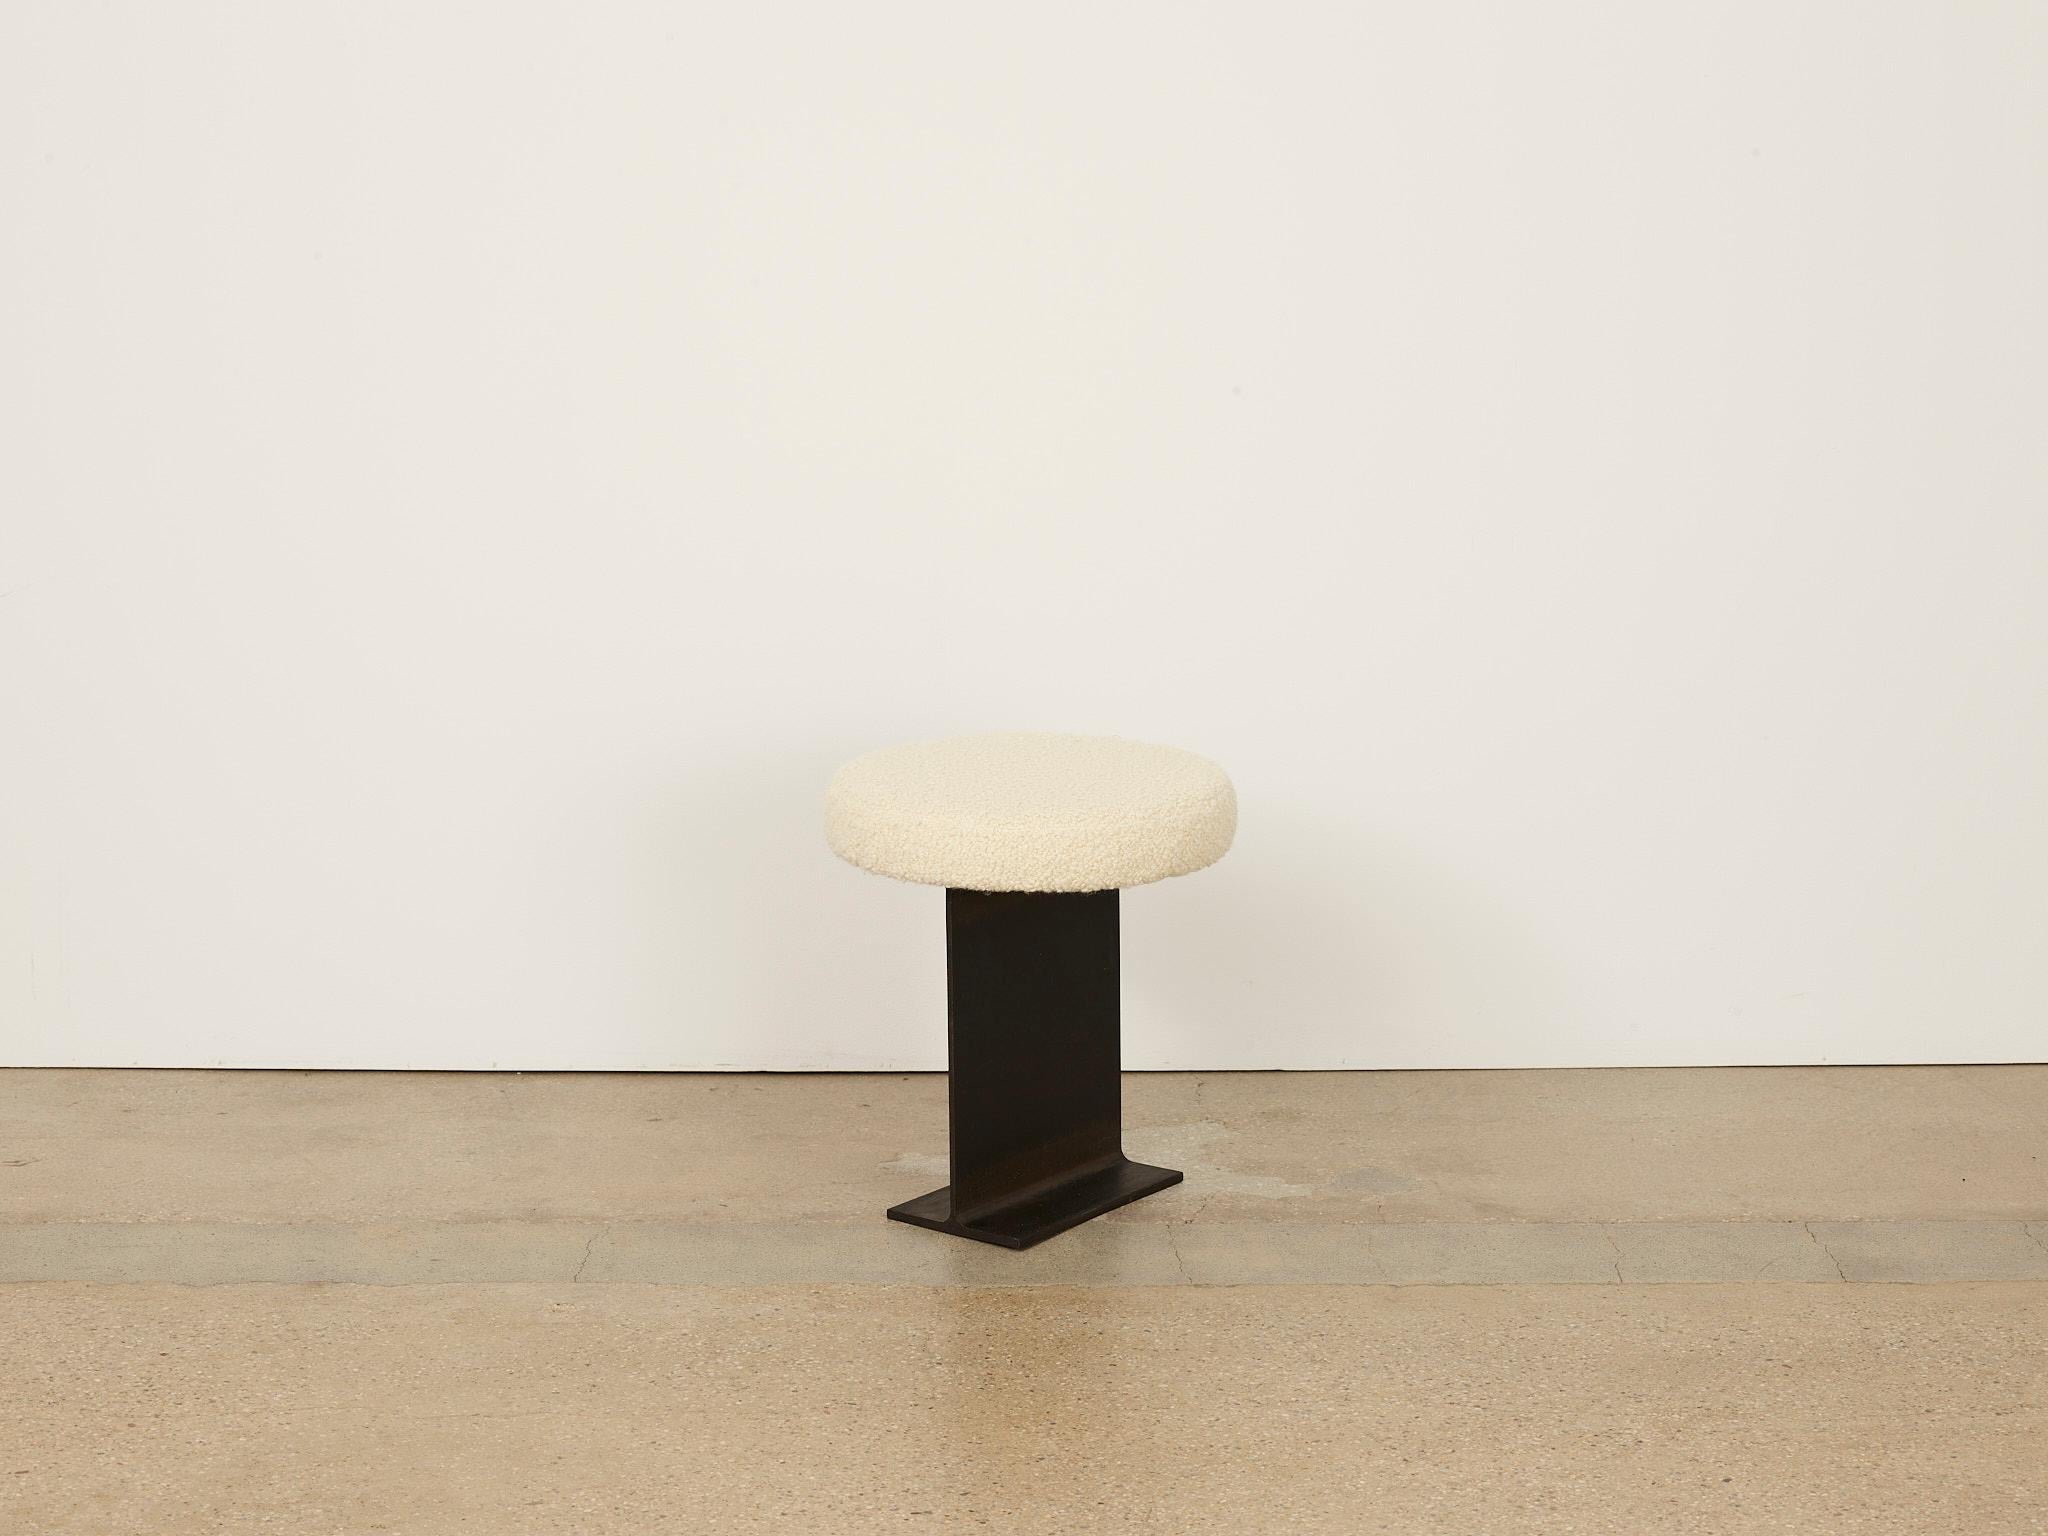 Trono Pill white chair by Umberto Bellardi Ricci
Dimensions: Diameter 16